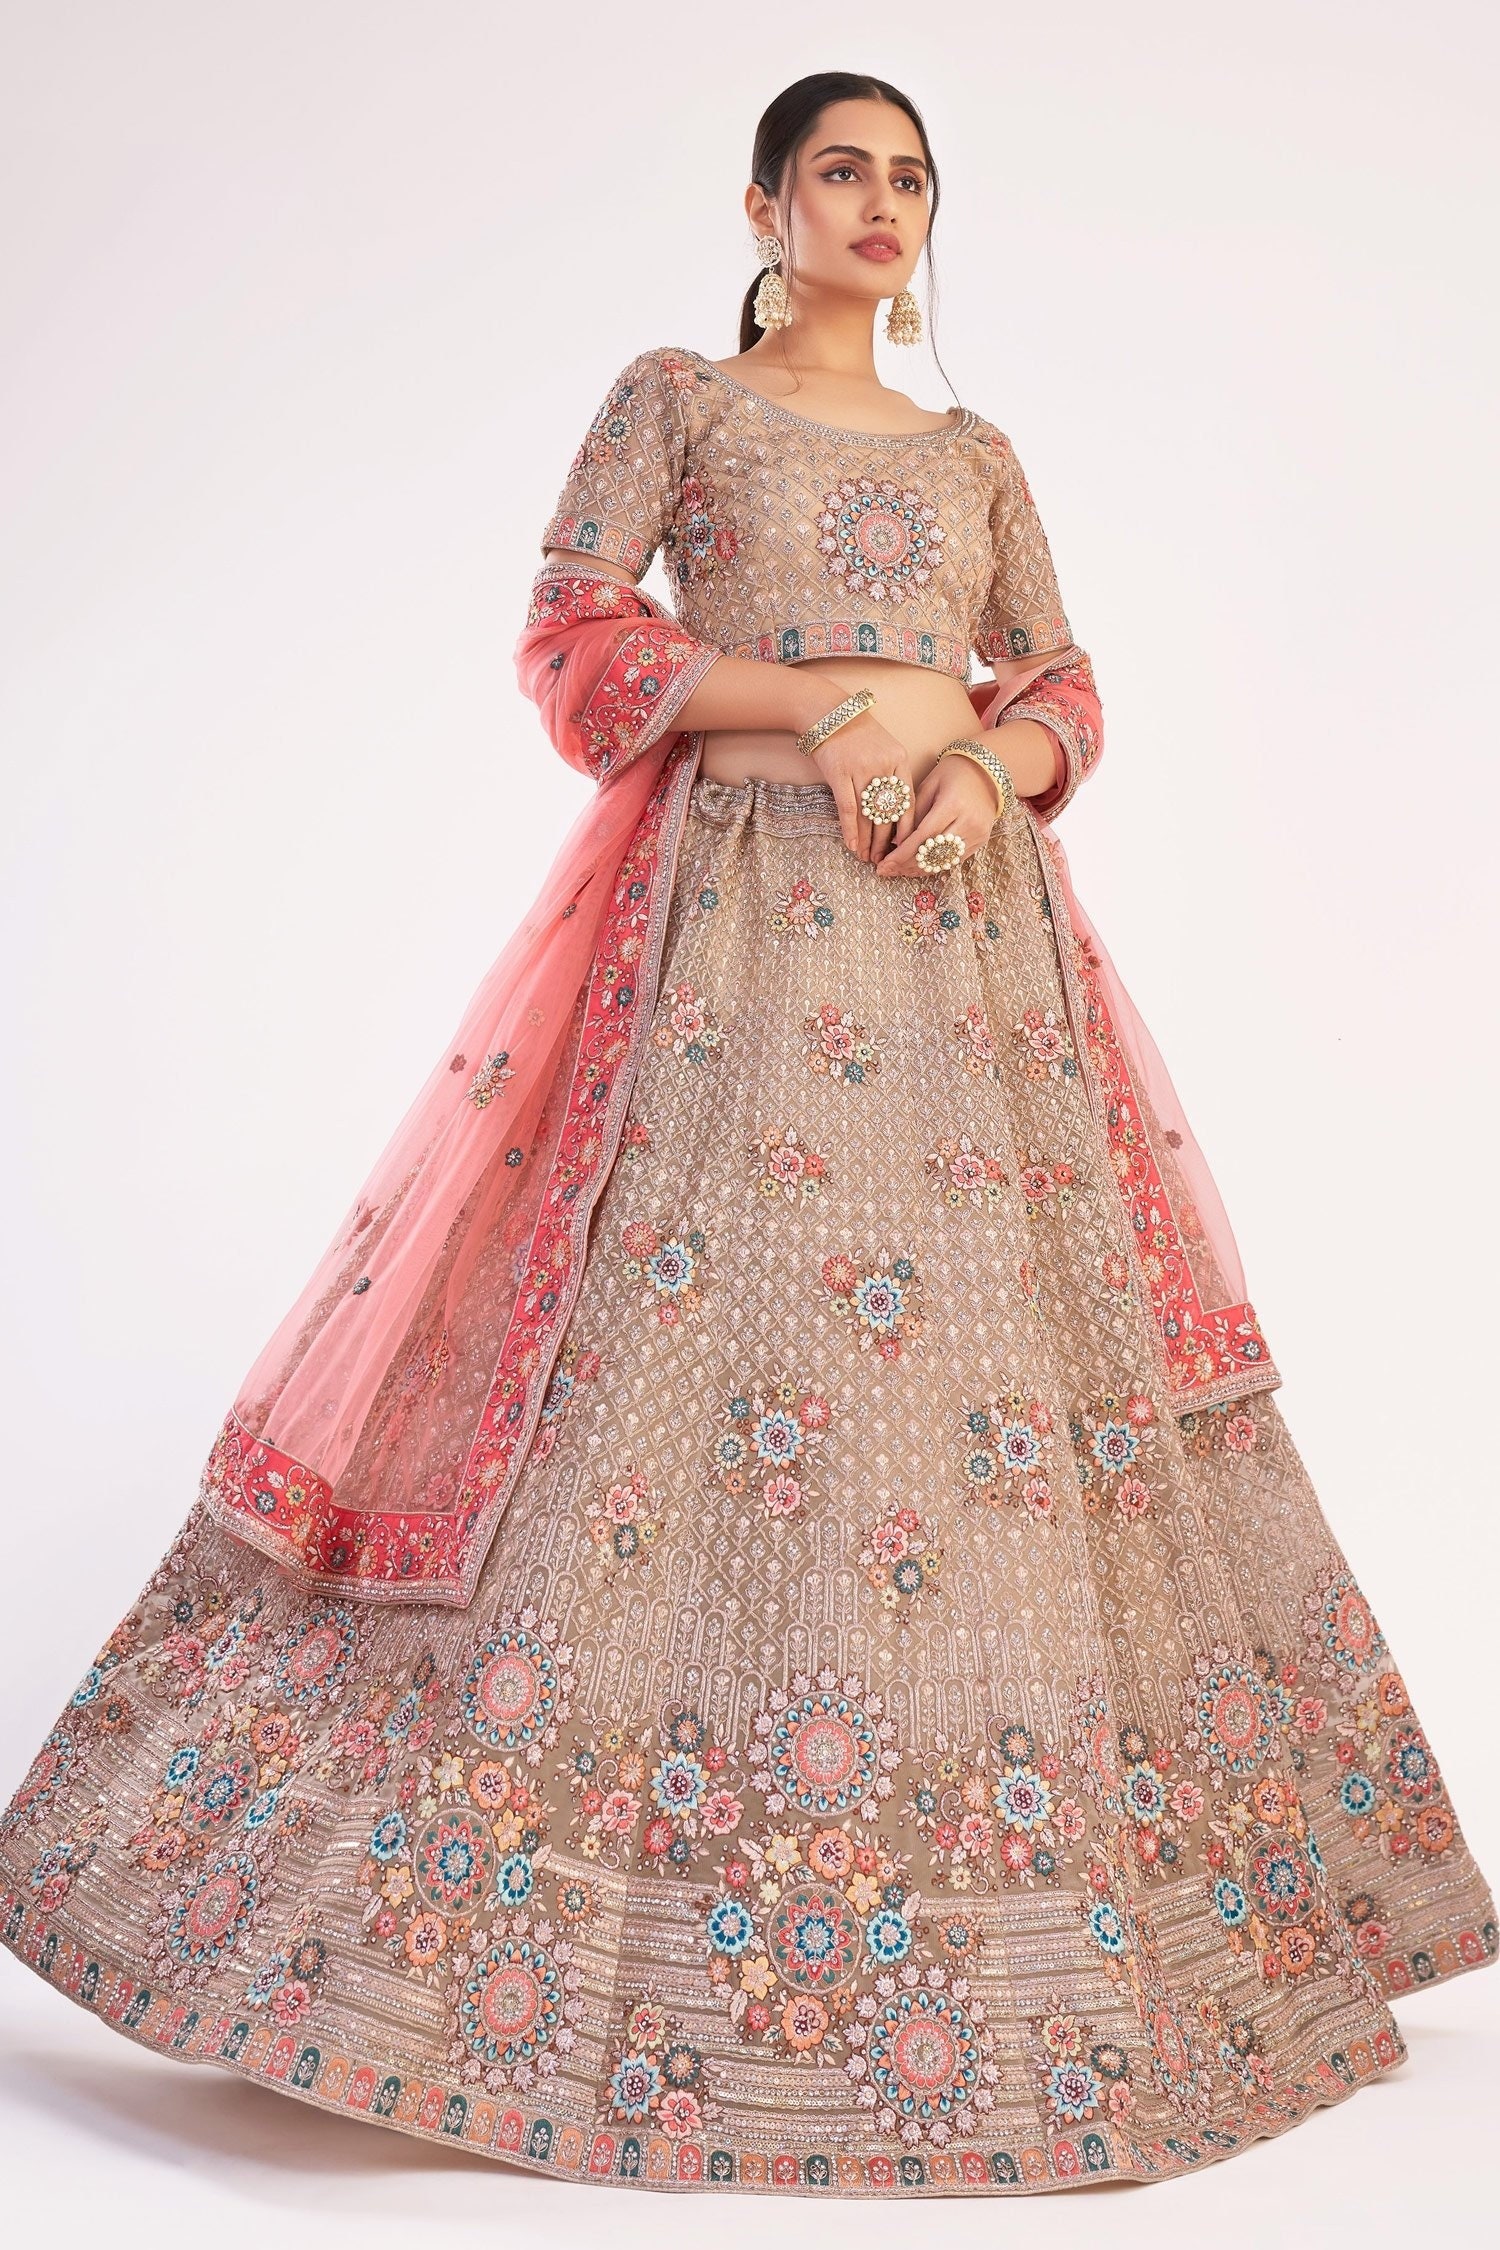 Bridal Wear Wedding Designer Lehenga Choli Pink All Over Embroidery Lehnga S810 